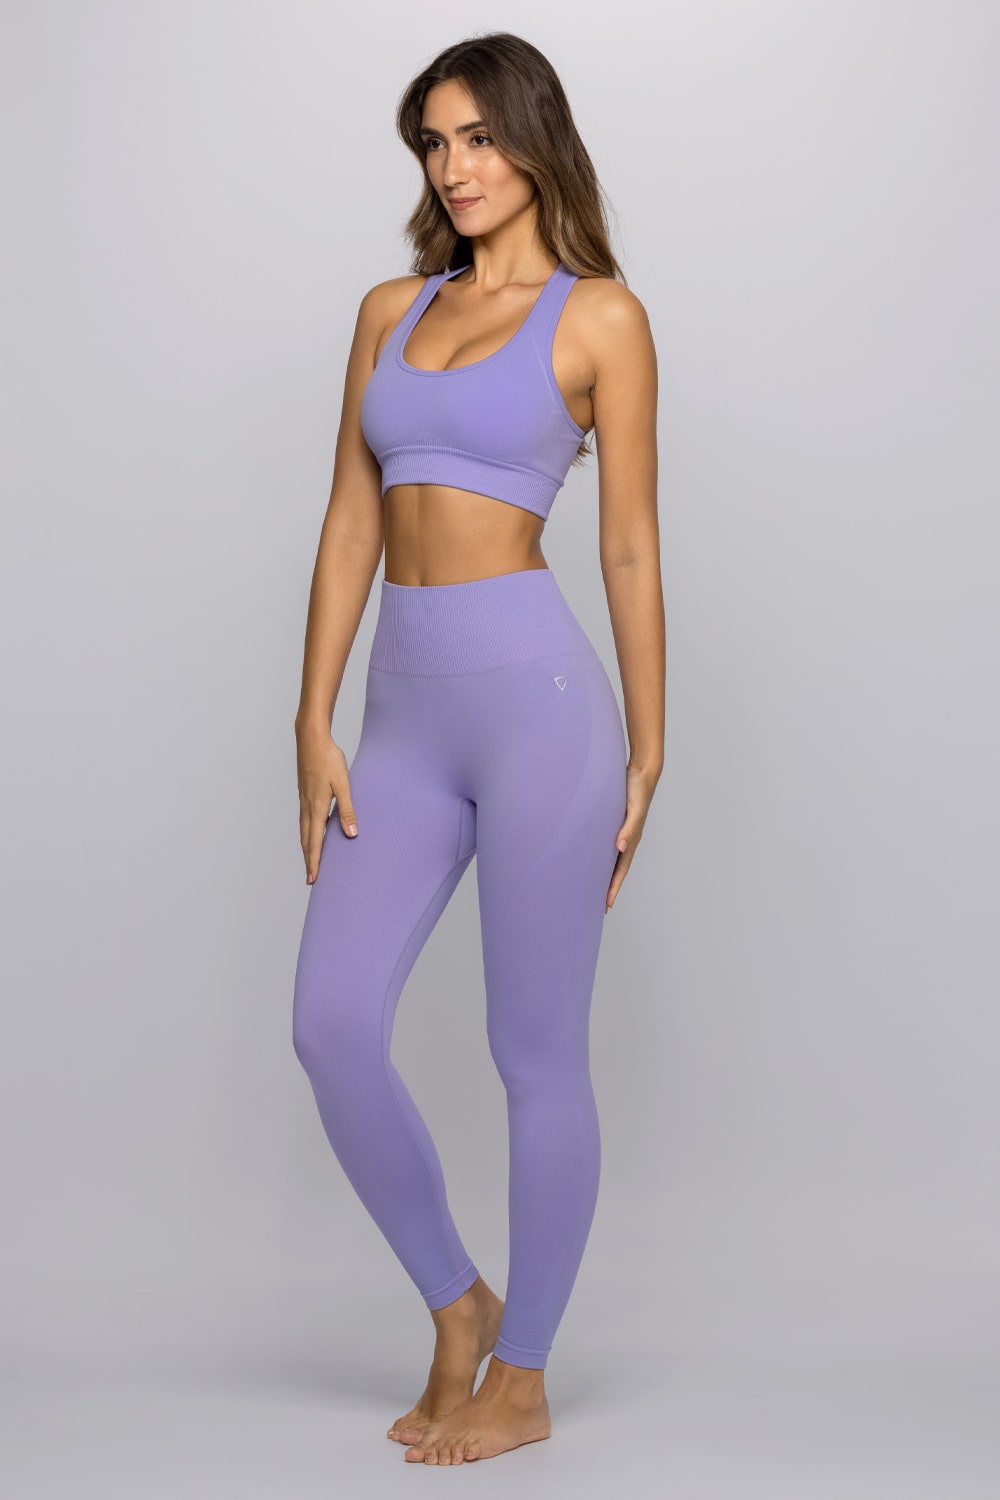 AMARA Seamless Outfit - Lilac